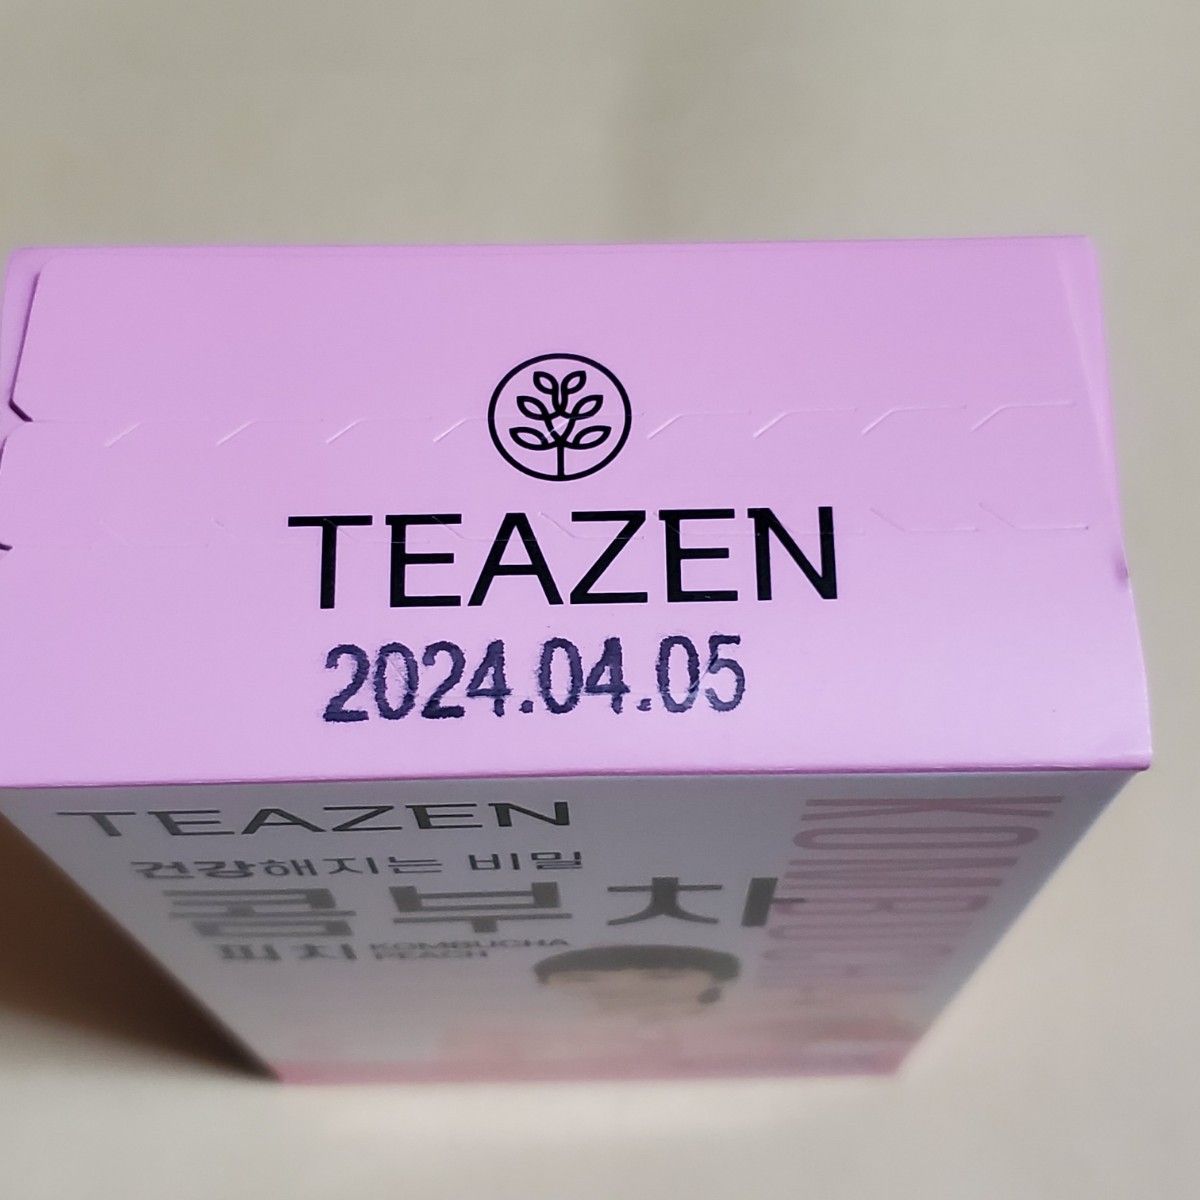 TEAZEN ティーゼン コンブチャ ピーチ(桃) 味 5g ×50